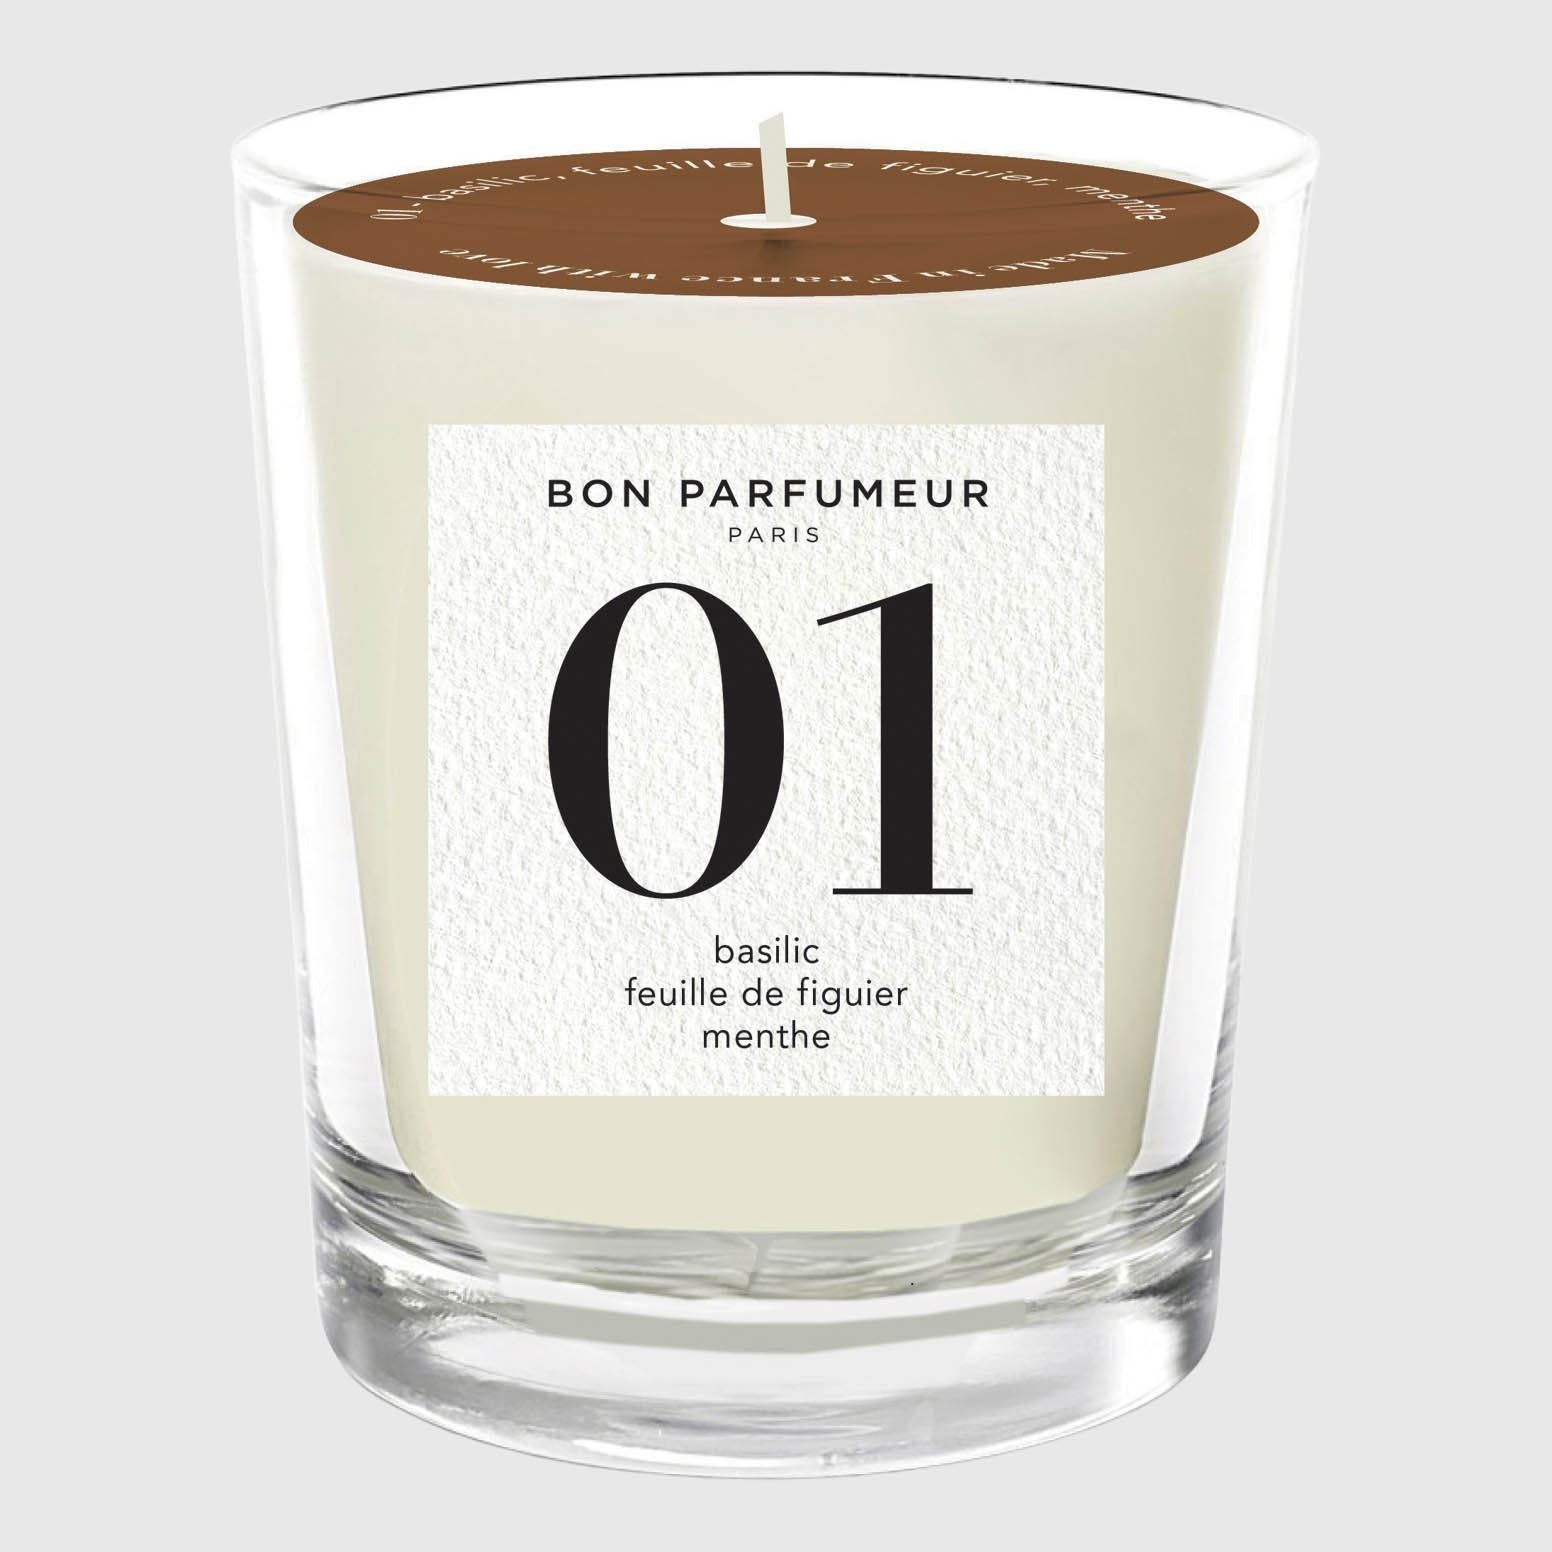 Bon Parfumeur Candle 01 Home Fragrance Bon Parfumeur 